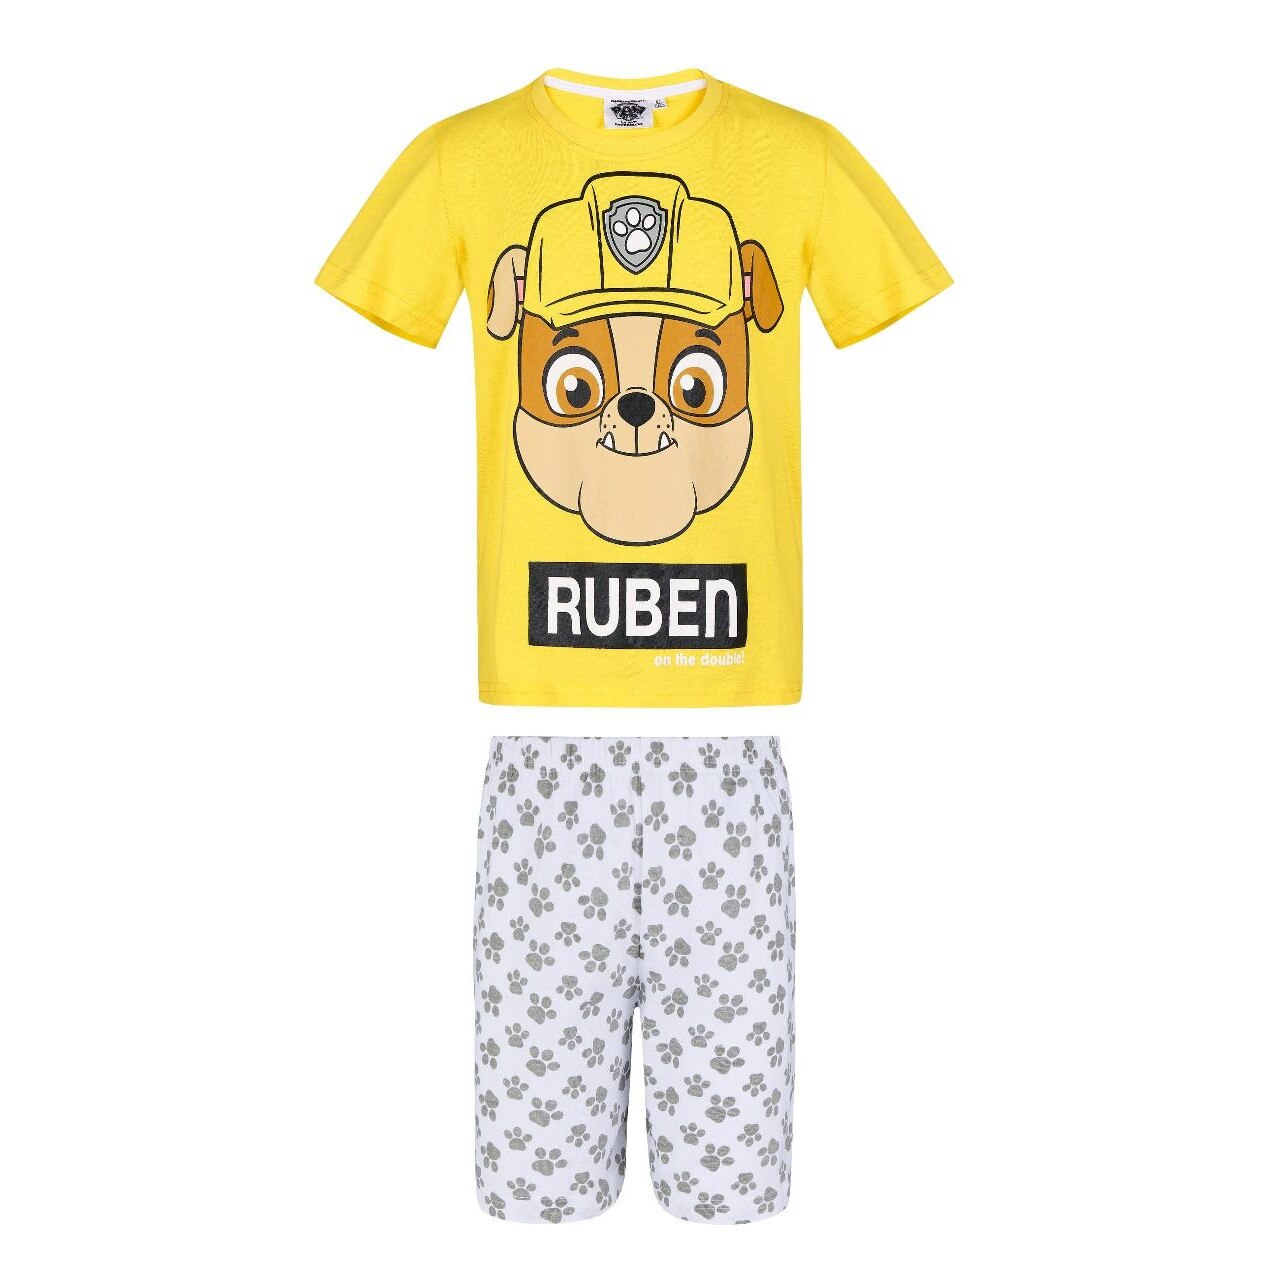 Pijamale Copii Patrula Catelusior Rubble 5 Ani 110 Cm Emagro